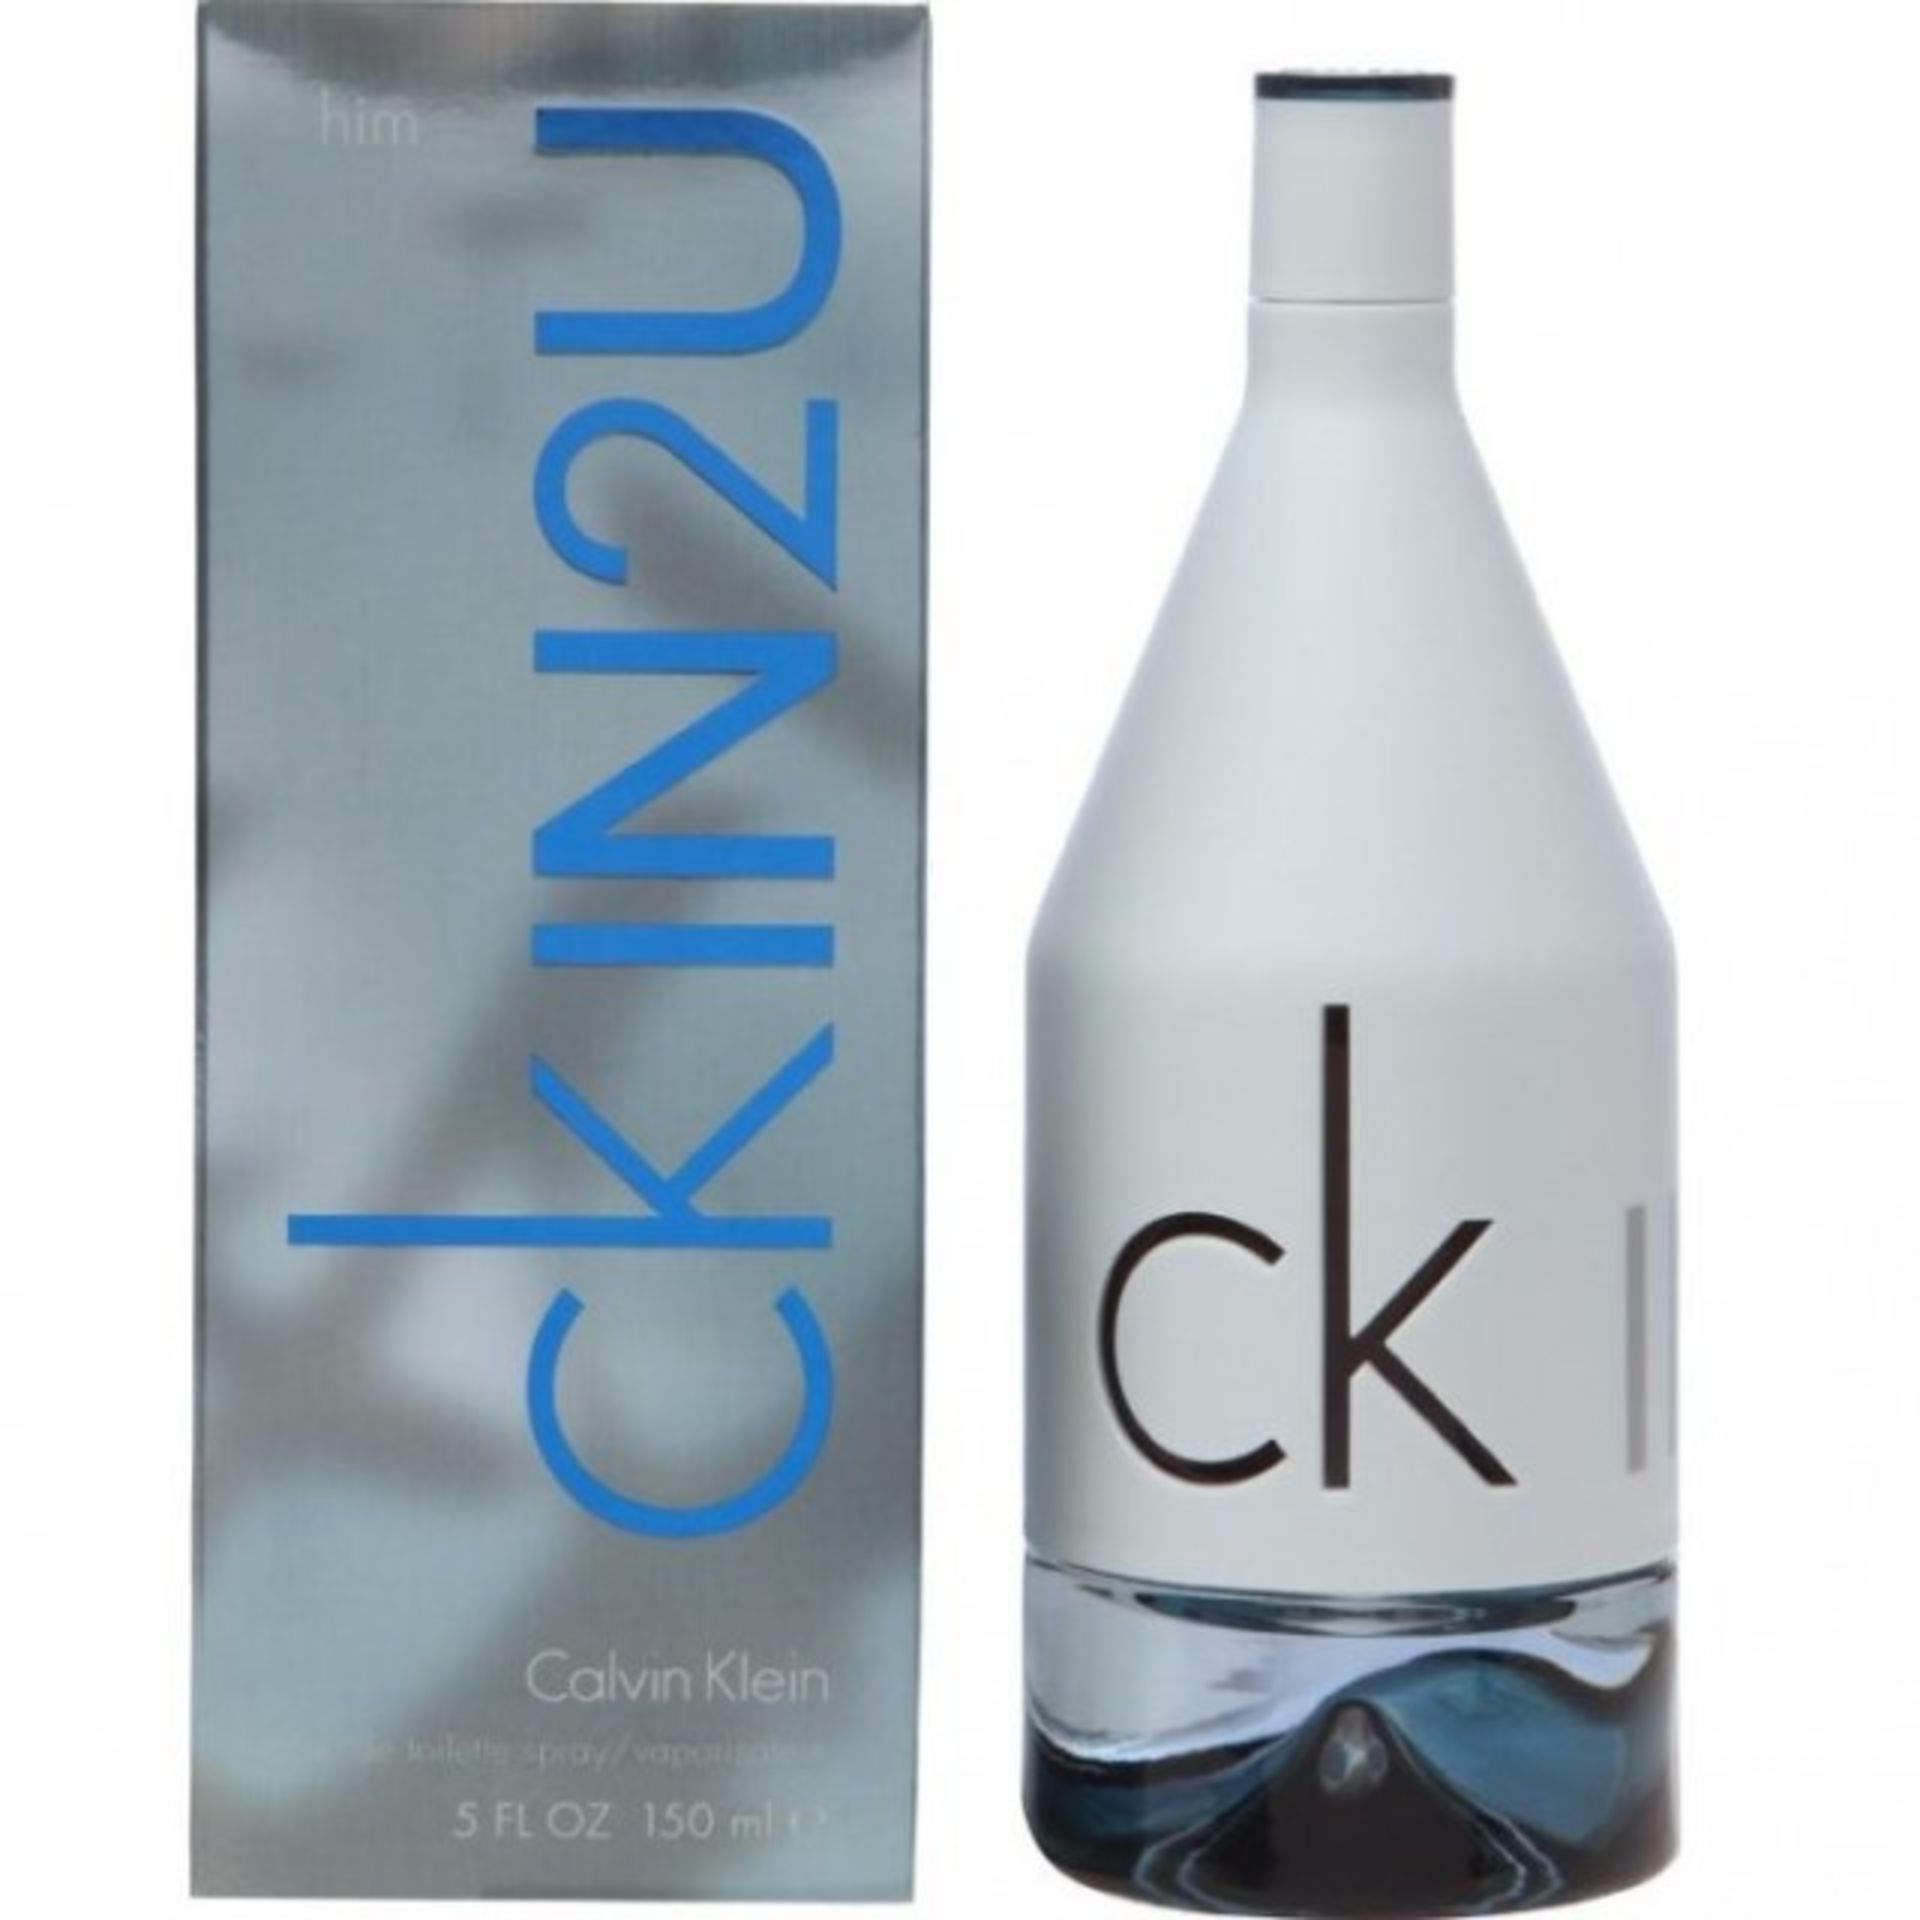 V *TRADE QTY* Brand New Calvin Klein CKIN2U Him Vapouriser Spray 150ml - RRP £52.00 - Boots Price £